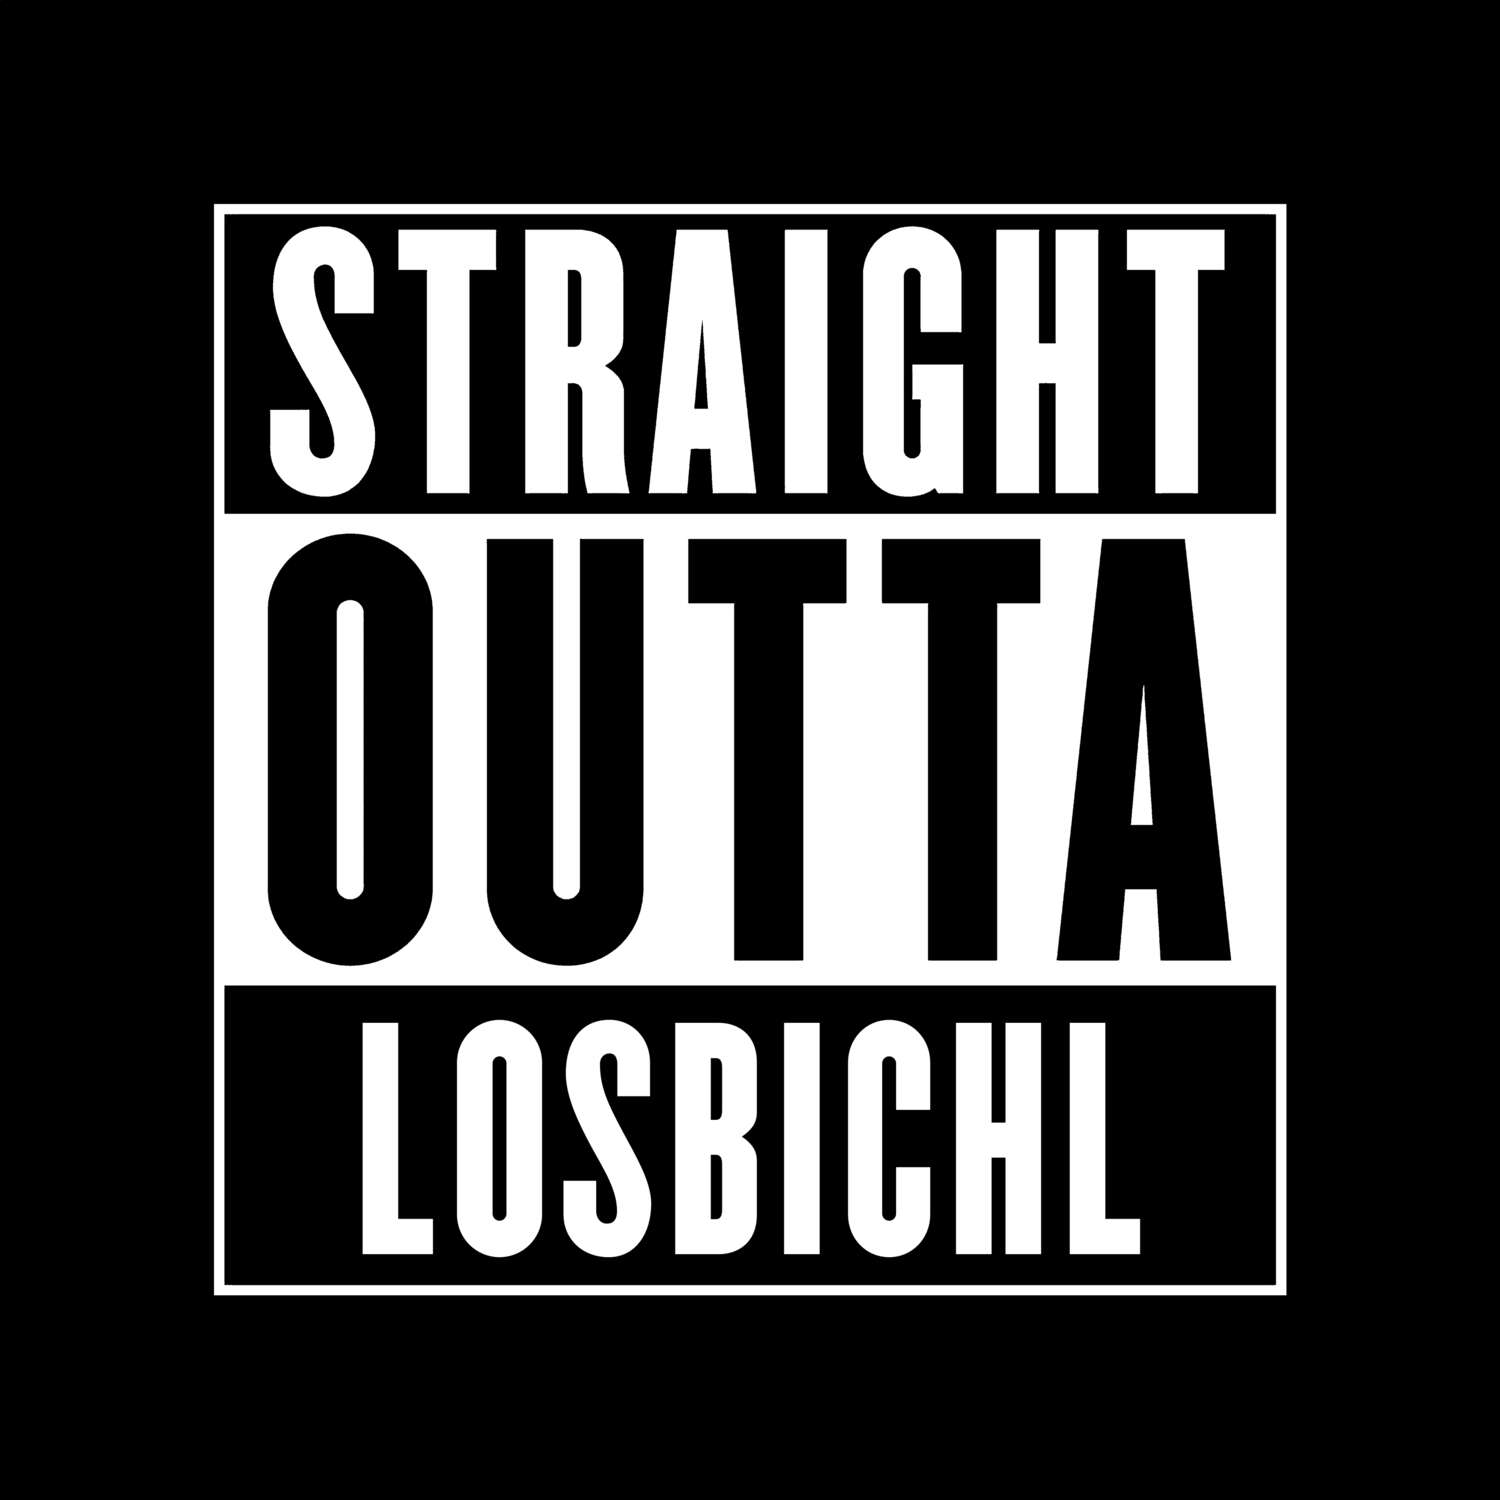 Losbichl T-Shirt »Straight Outta«